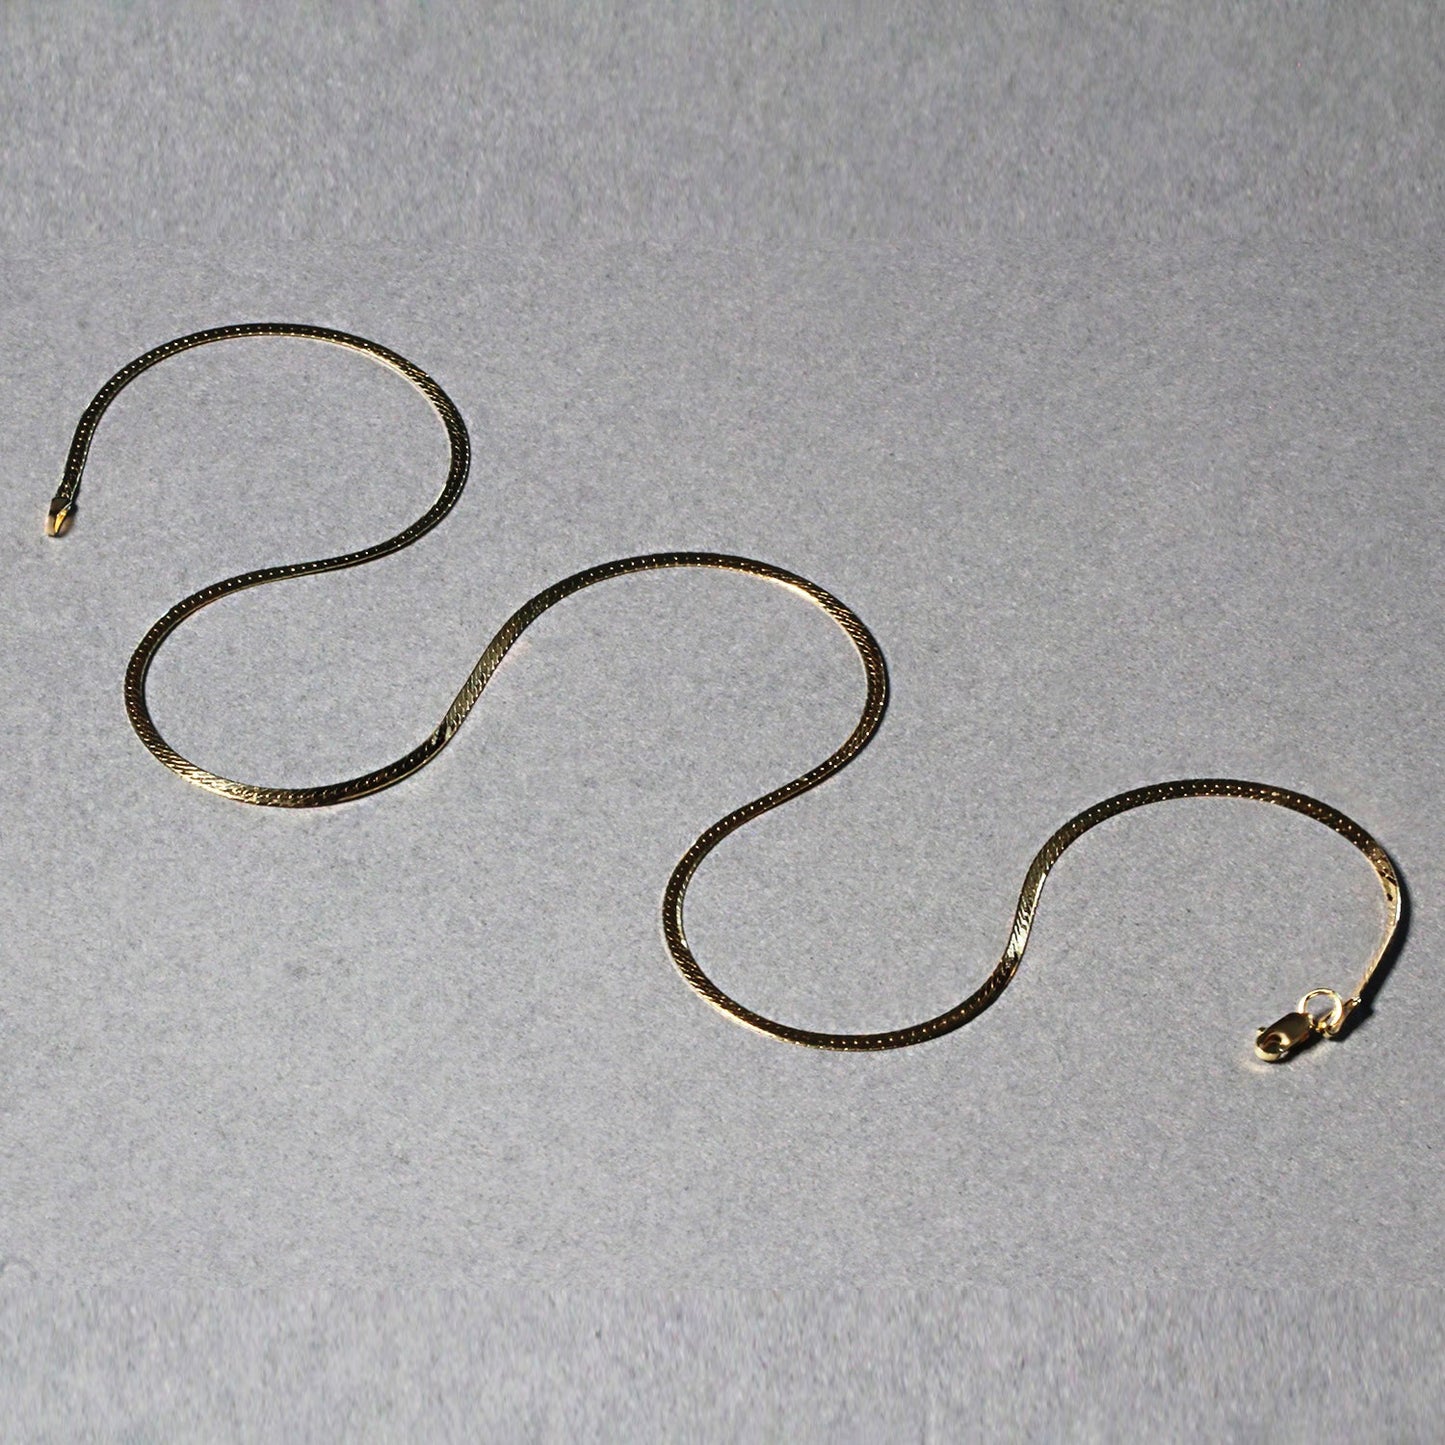 1.5mm 14k Yellow Gold Super Flex Herringbone Chain